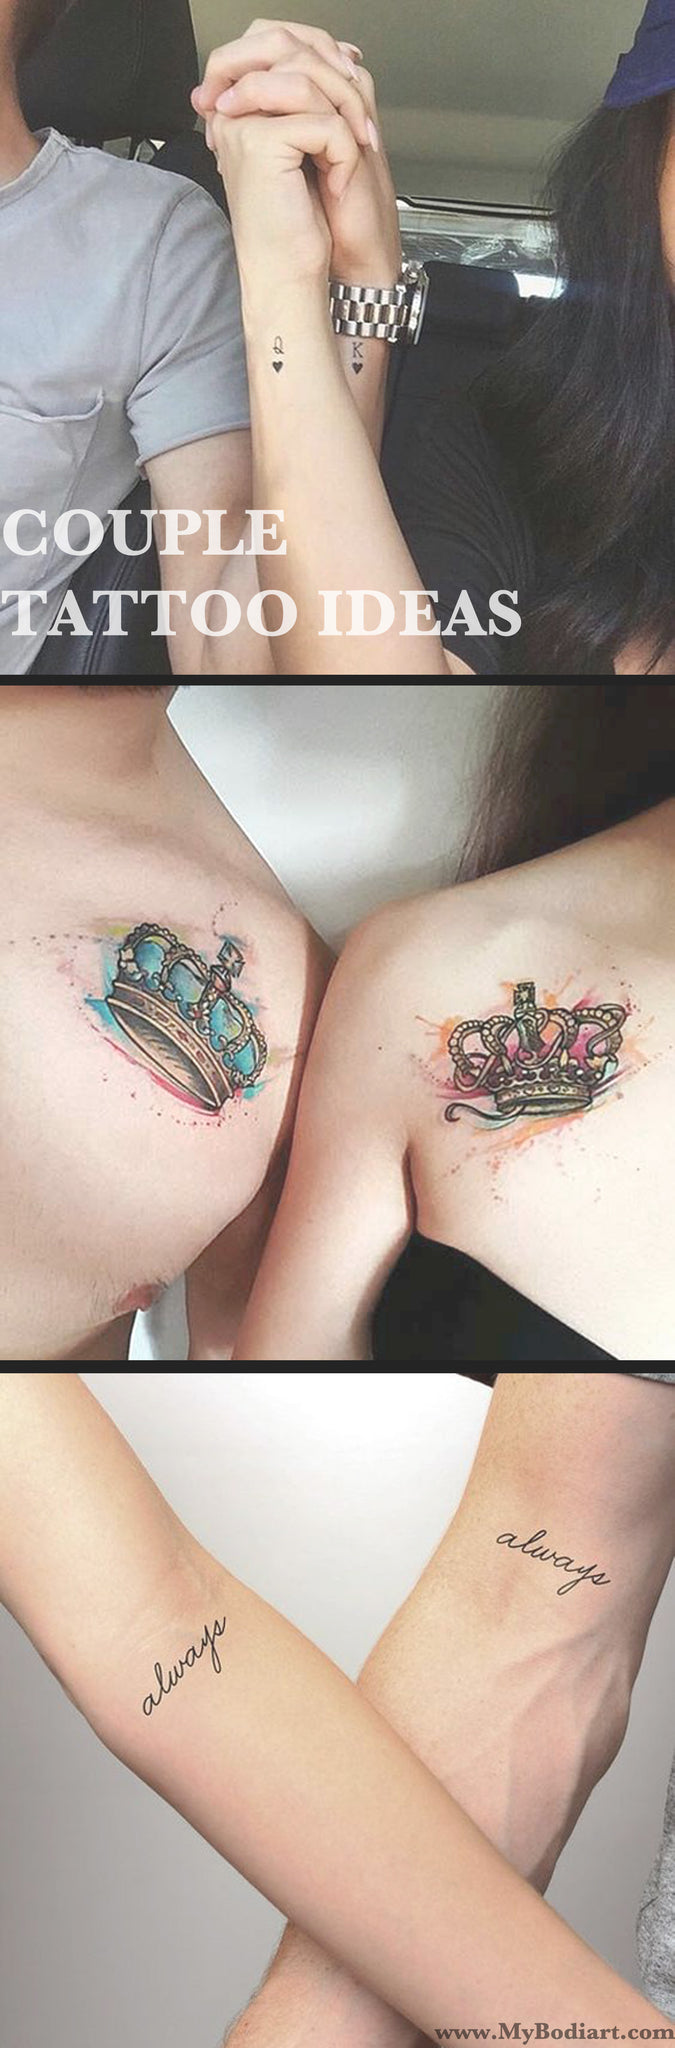 Cute Couple Tattoo Ideas for Boyfriend & Girlfriend - Small Queen and King Crown Shoulder Wrist Tatouage - Always Script Quote Arms Ideas Del Tatuaje - www.MyBodiArt.com